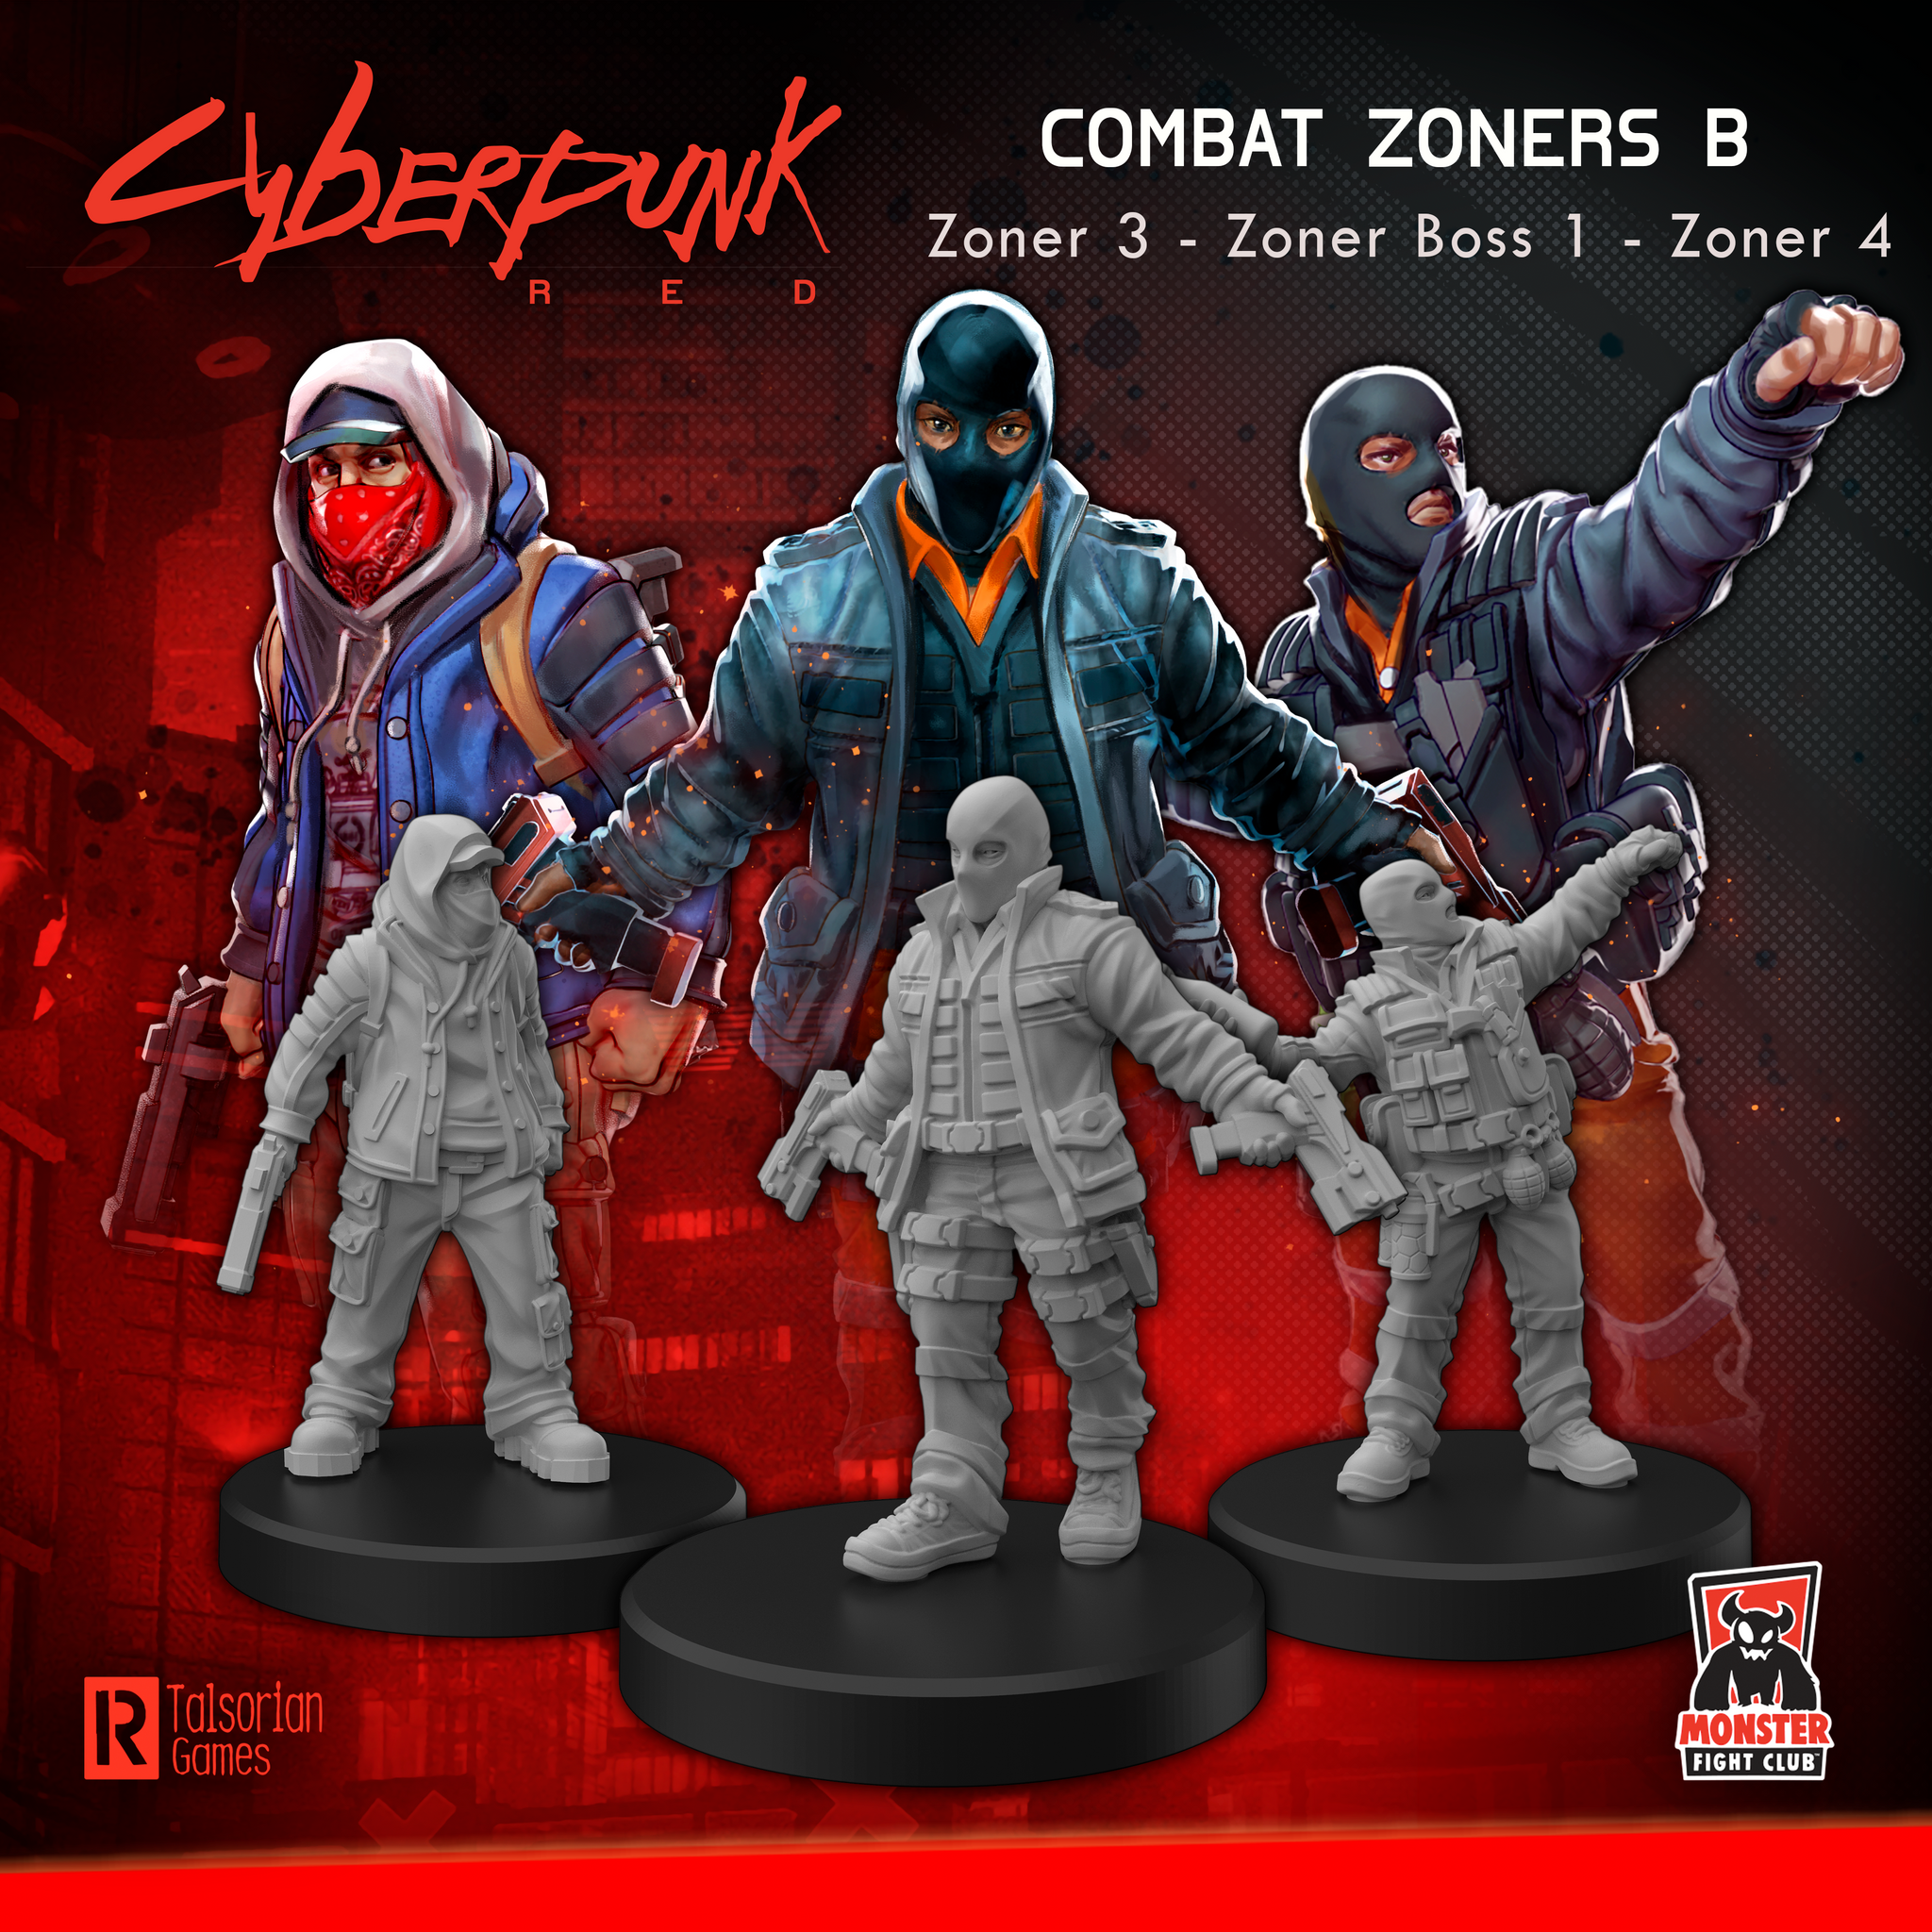 Cyberpunk RED - Combat Zoners B